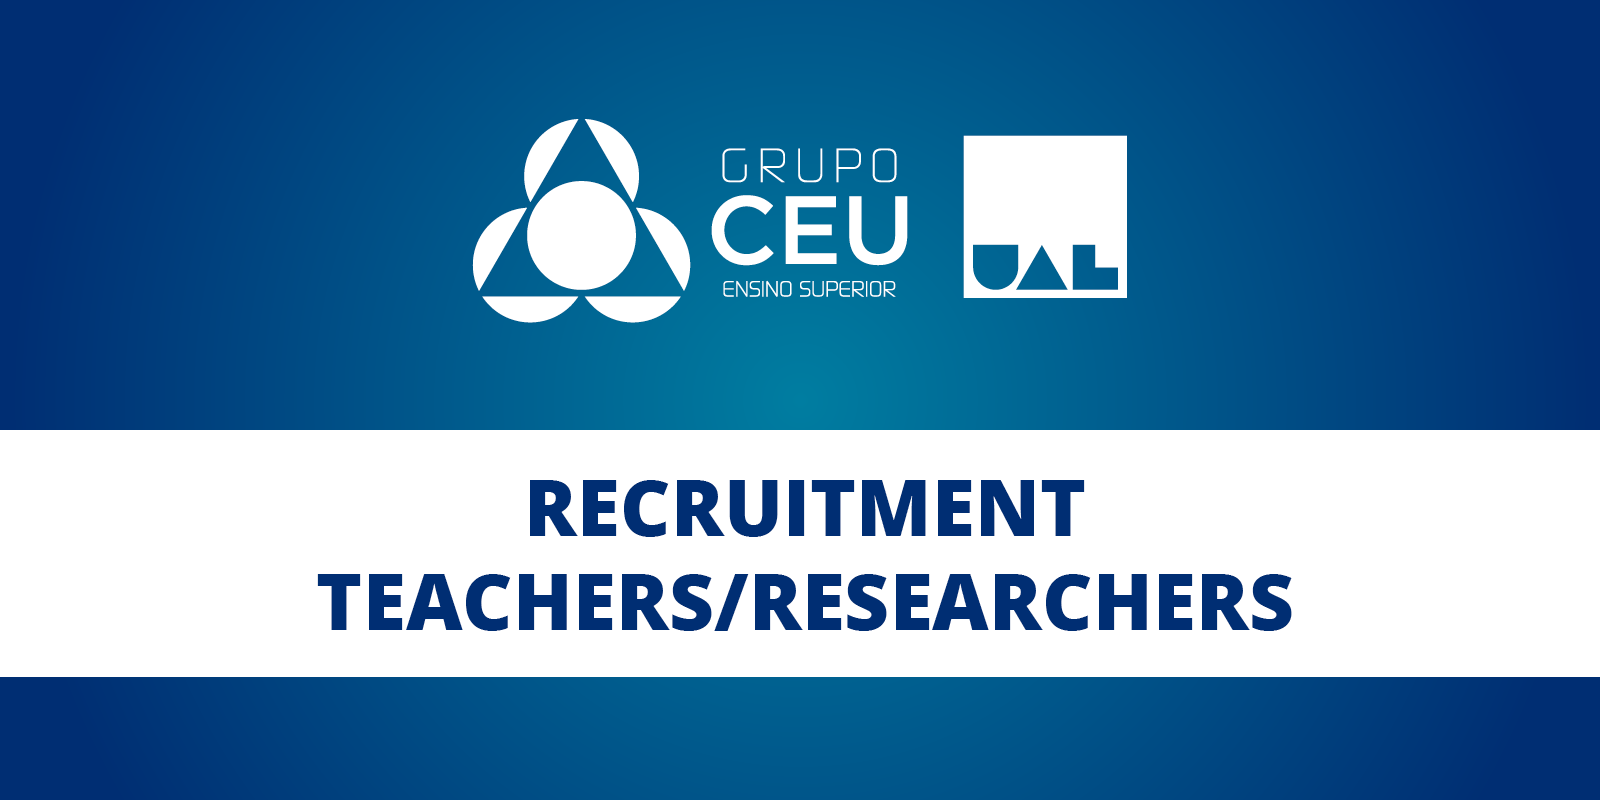 RECRUITMENT TEACHERS/RESEARCHERS